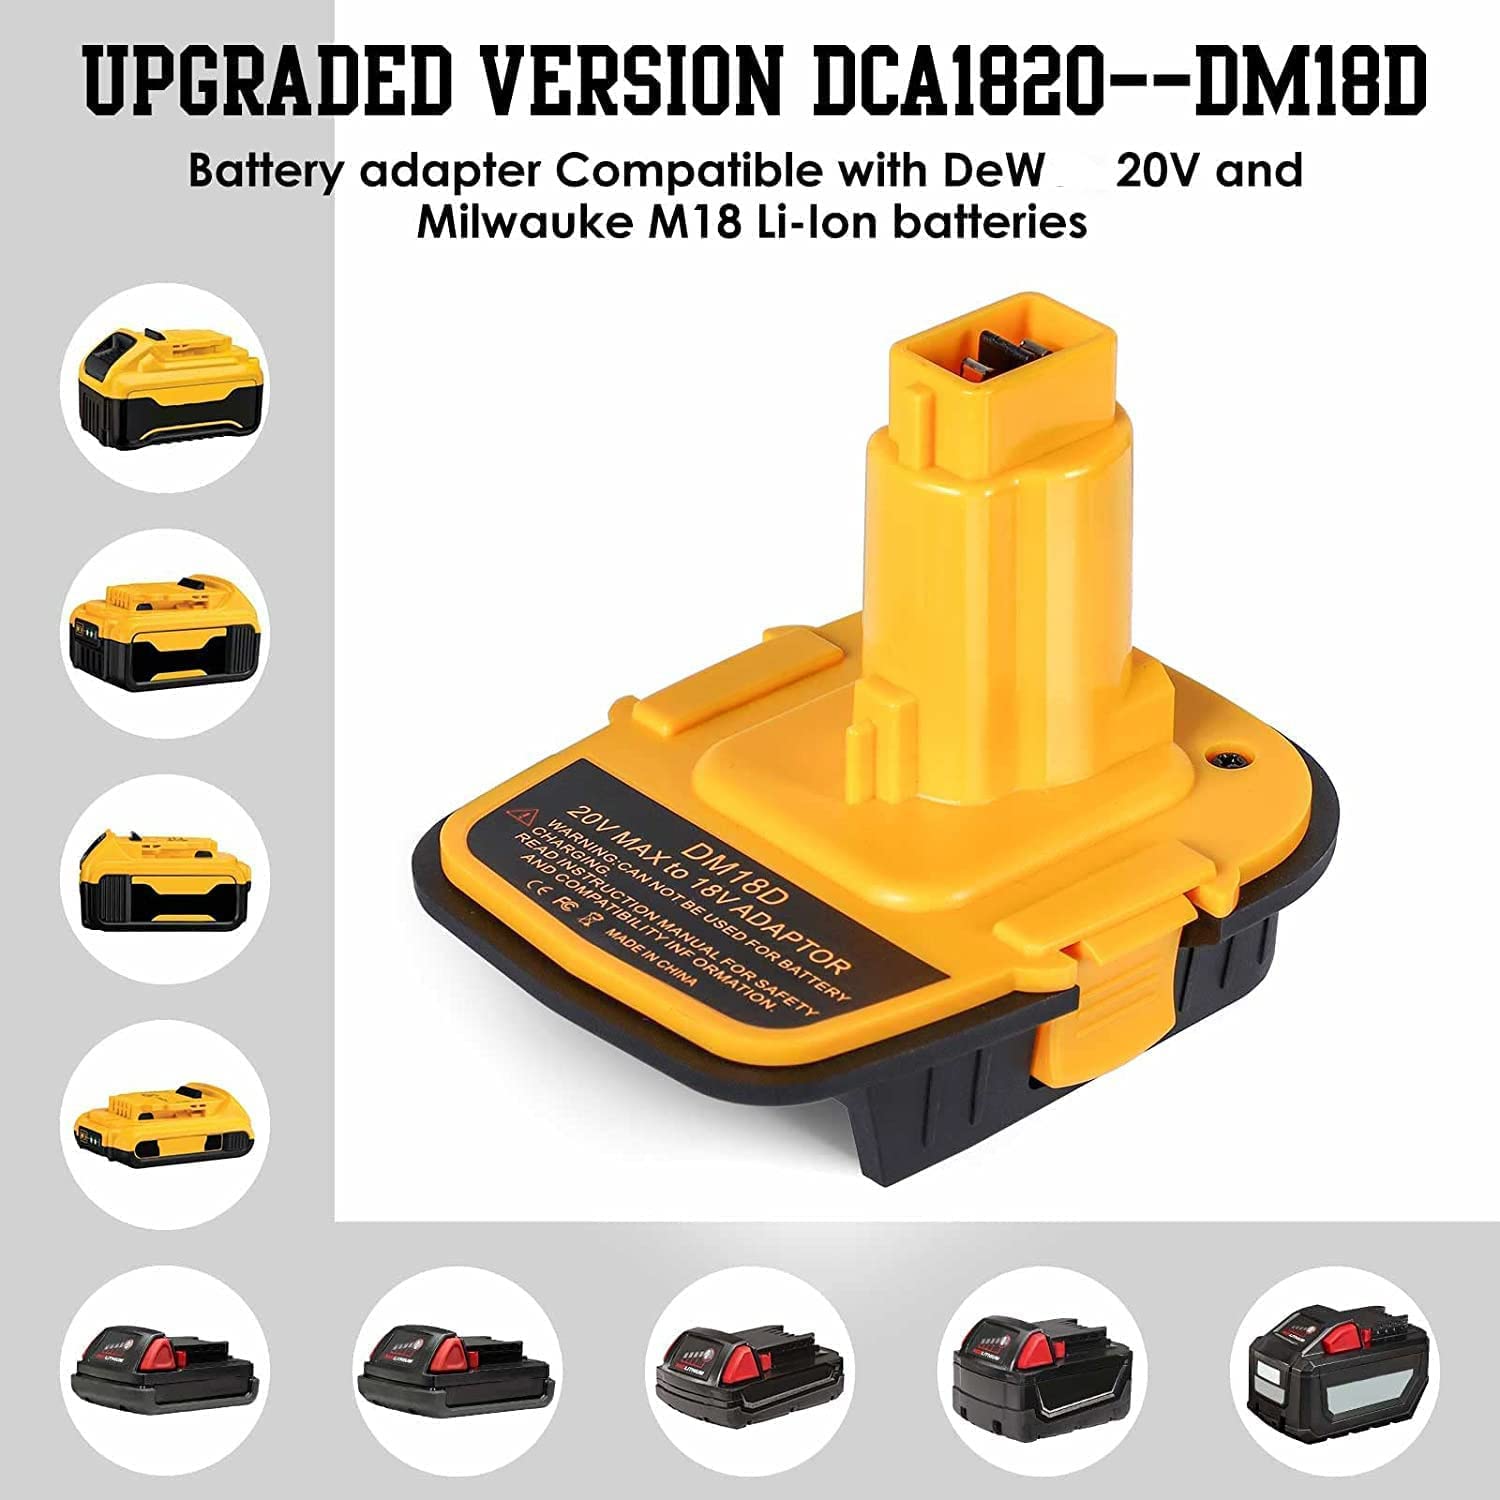 Adaptor batré DM18D kalawan port USB